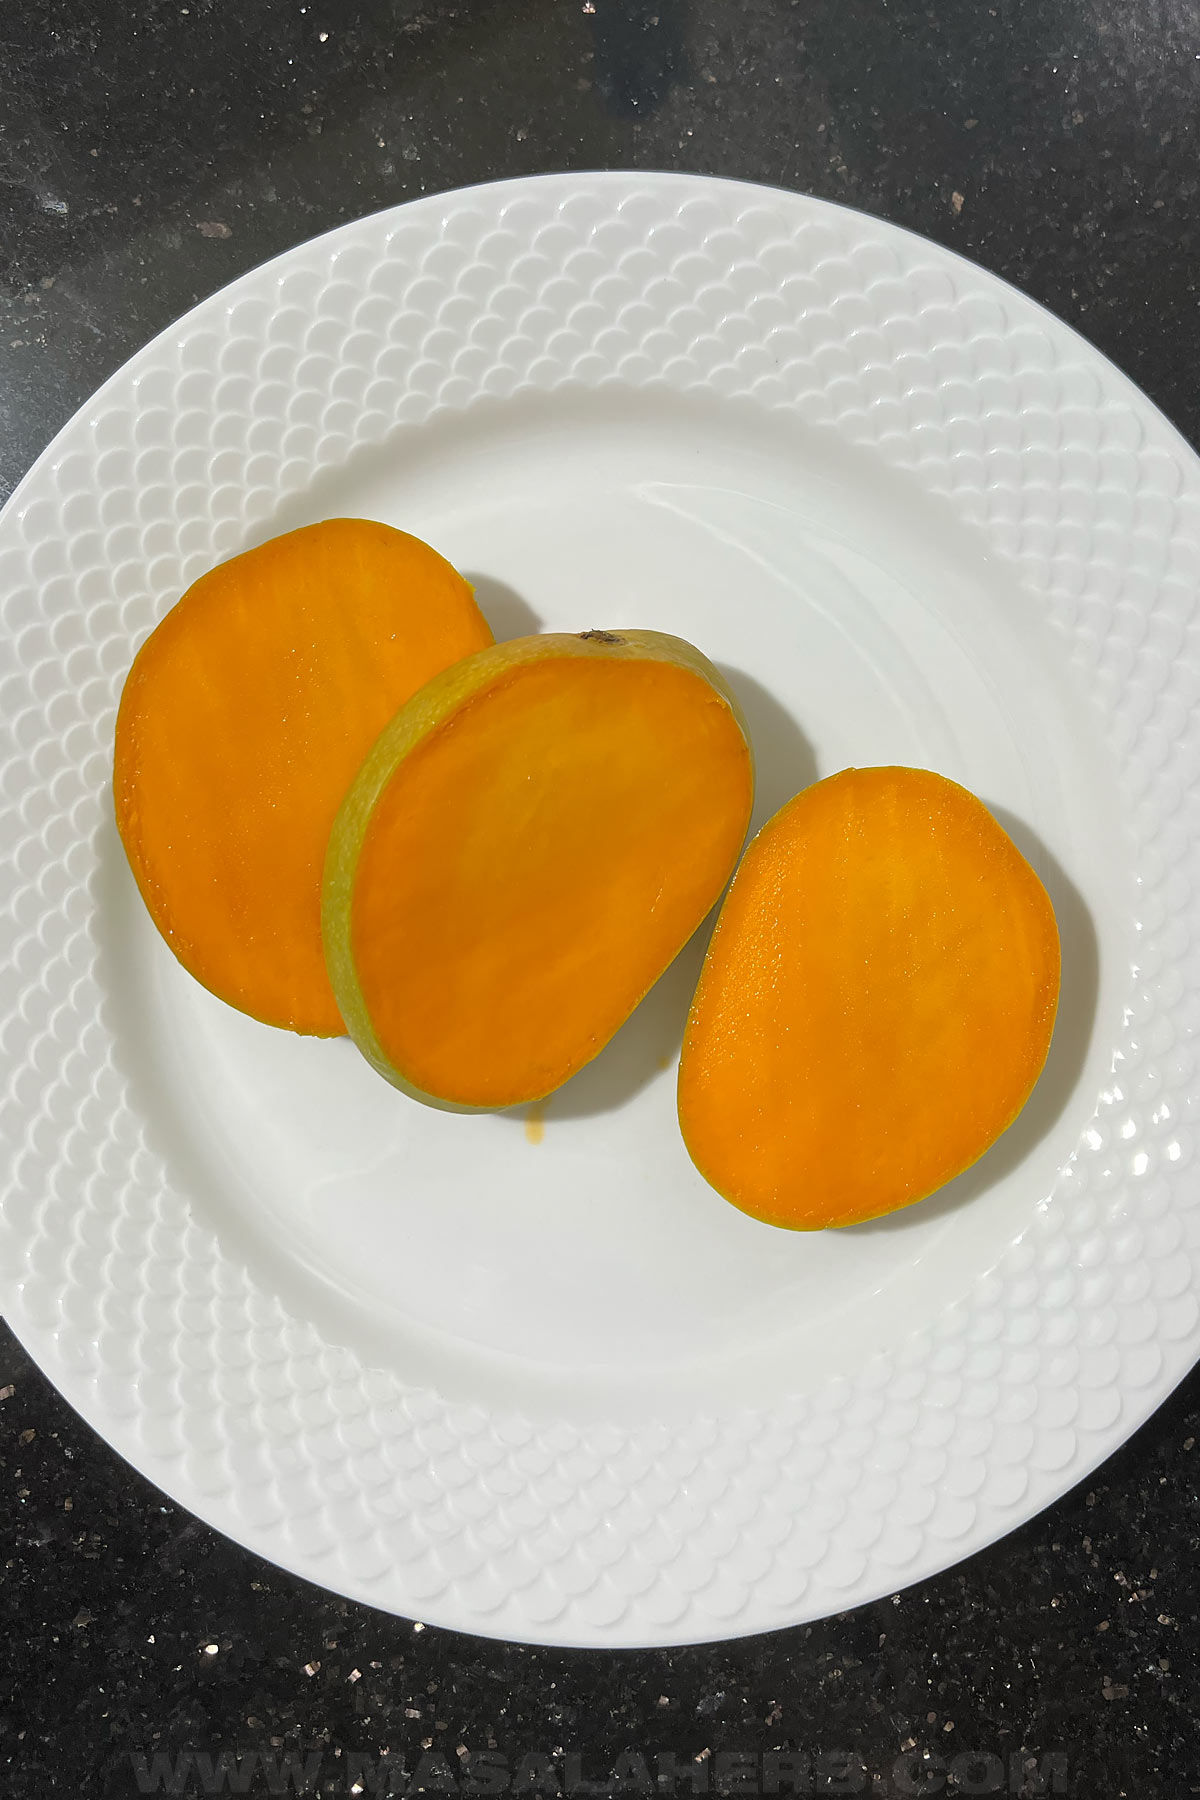 Alphonso mango cut open